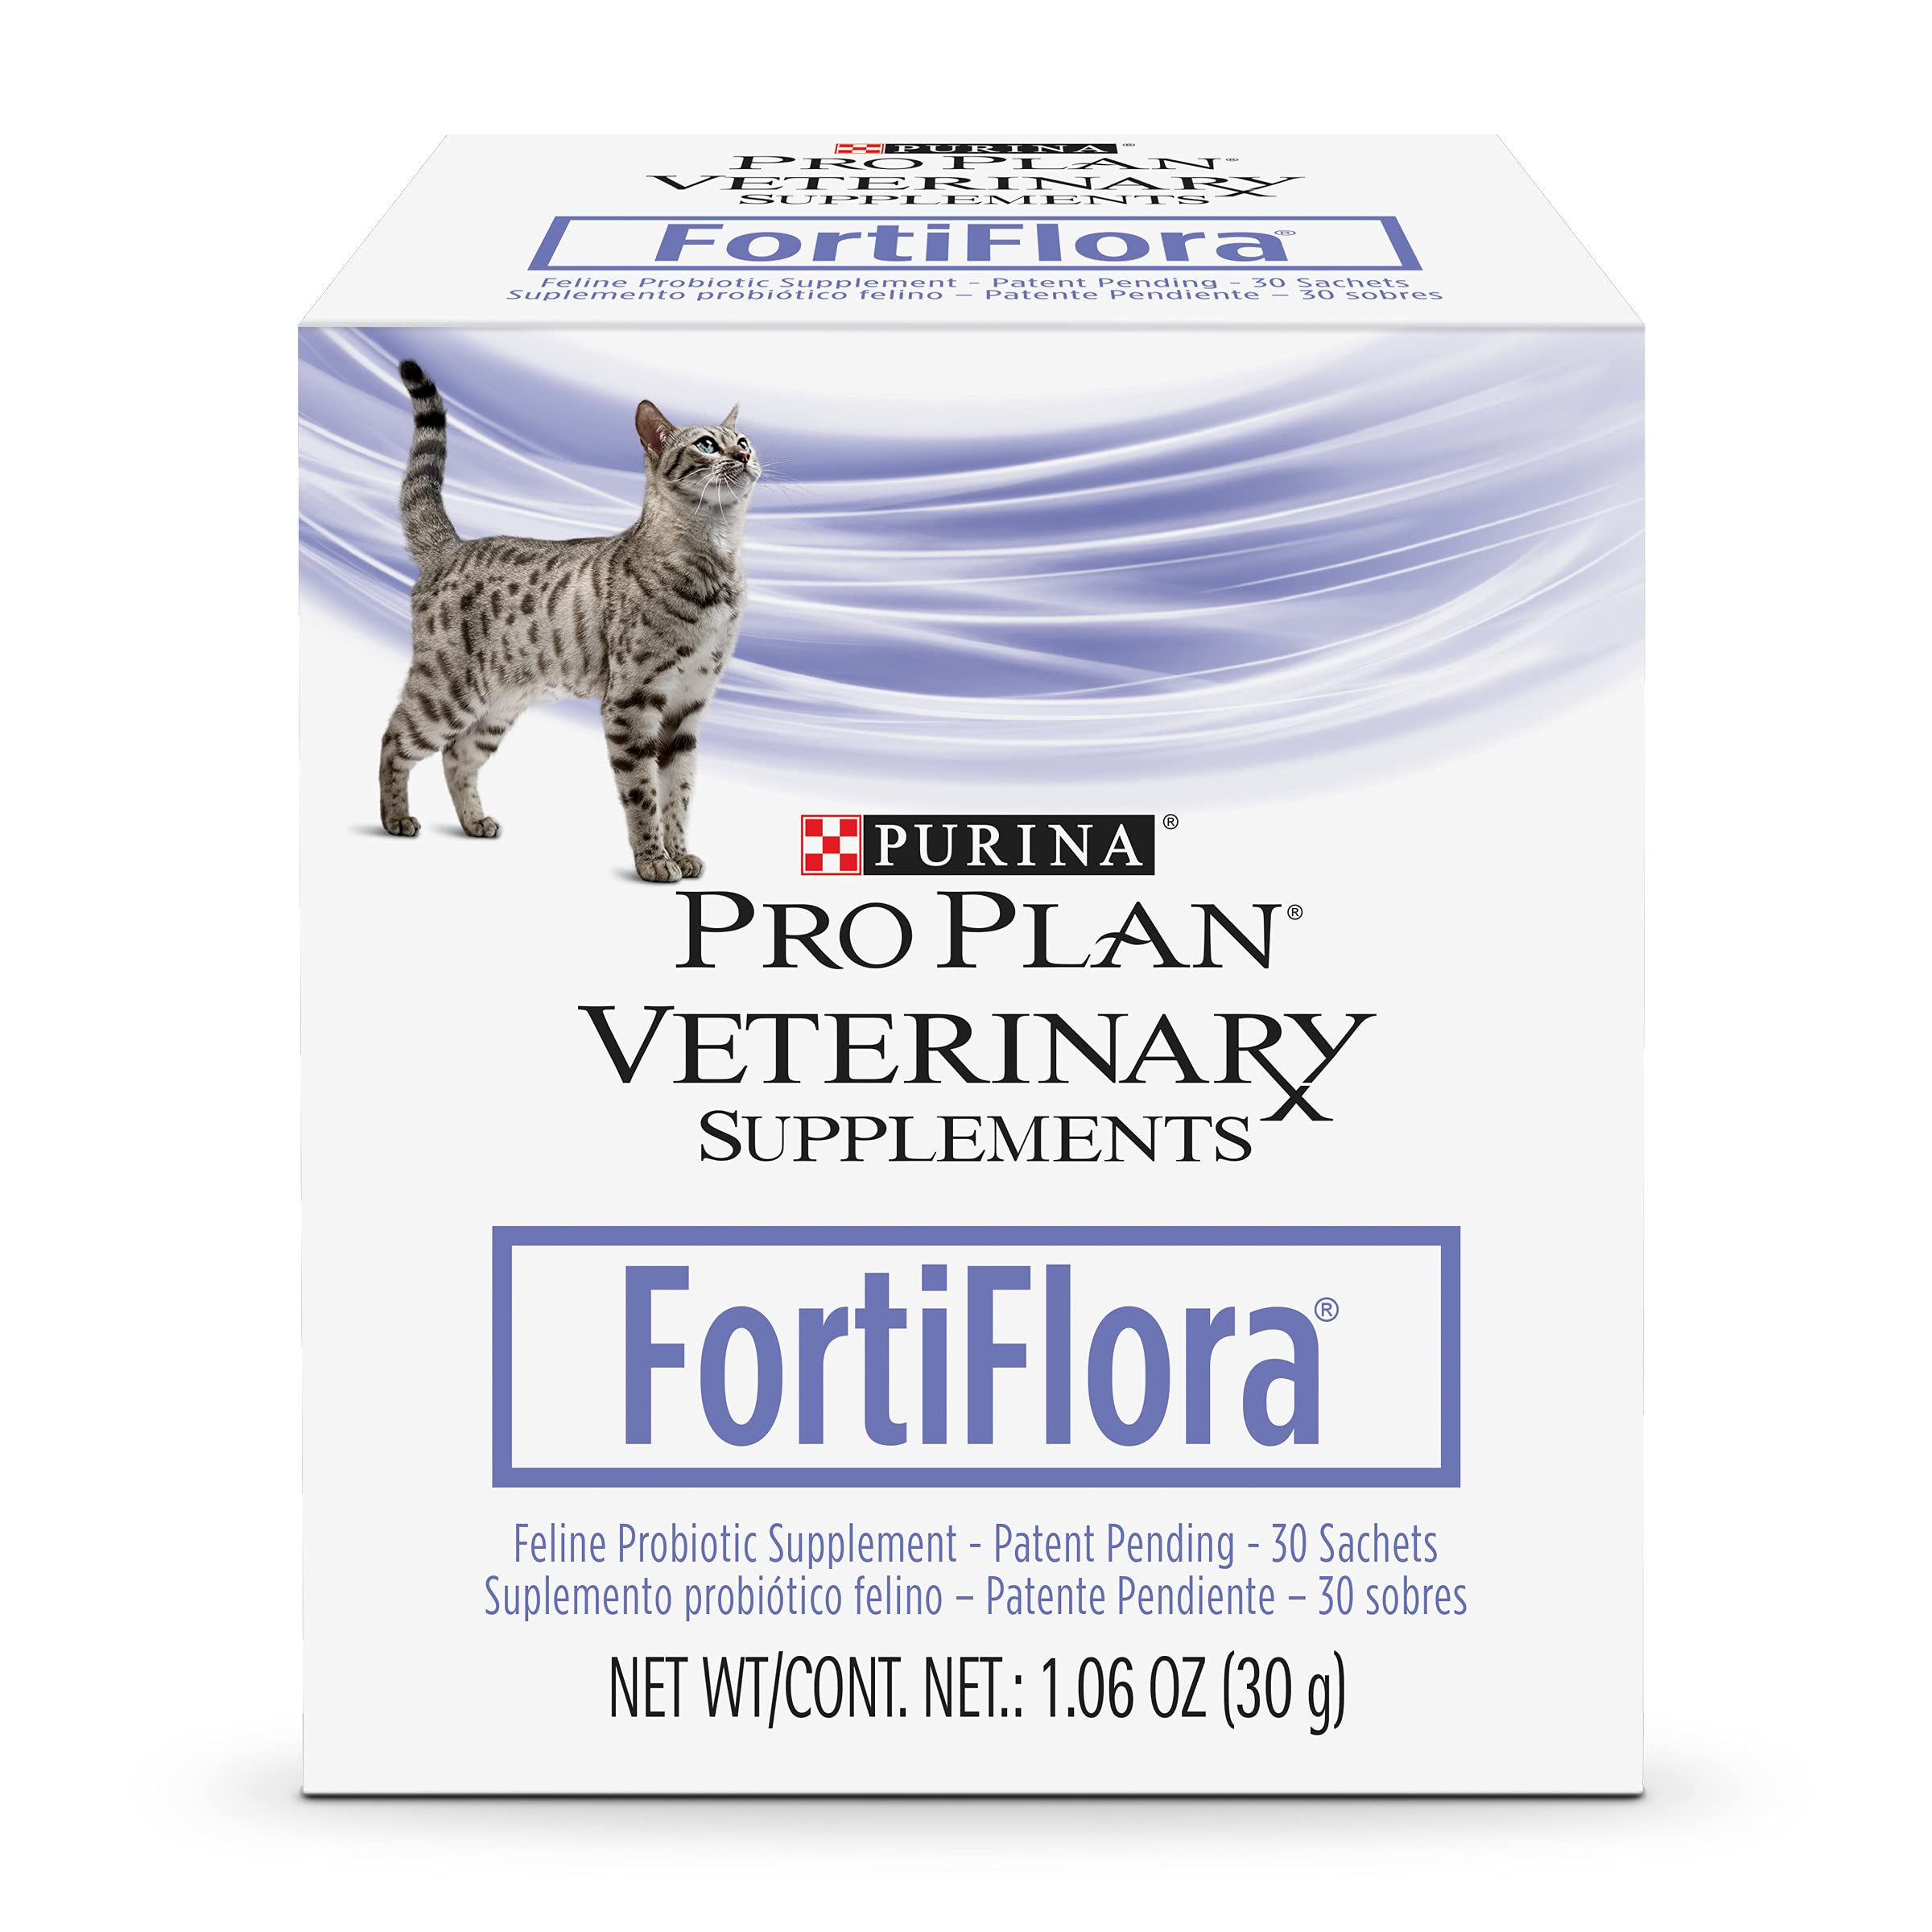 Purina Fortiflora 猫益生菌粉末补充剂，Pro Plan 兽医补充剂 益生菌猫补充剂...